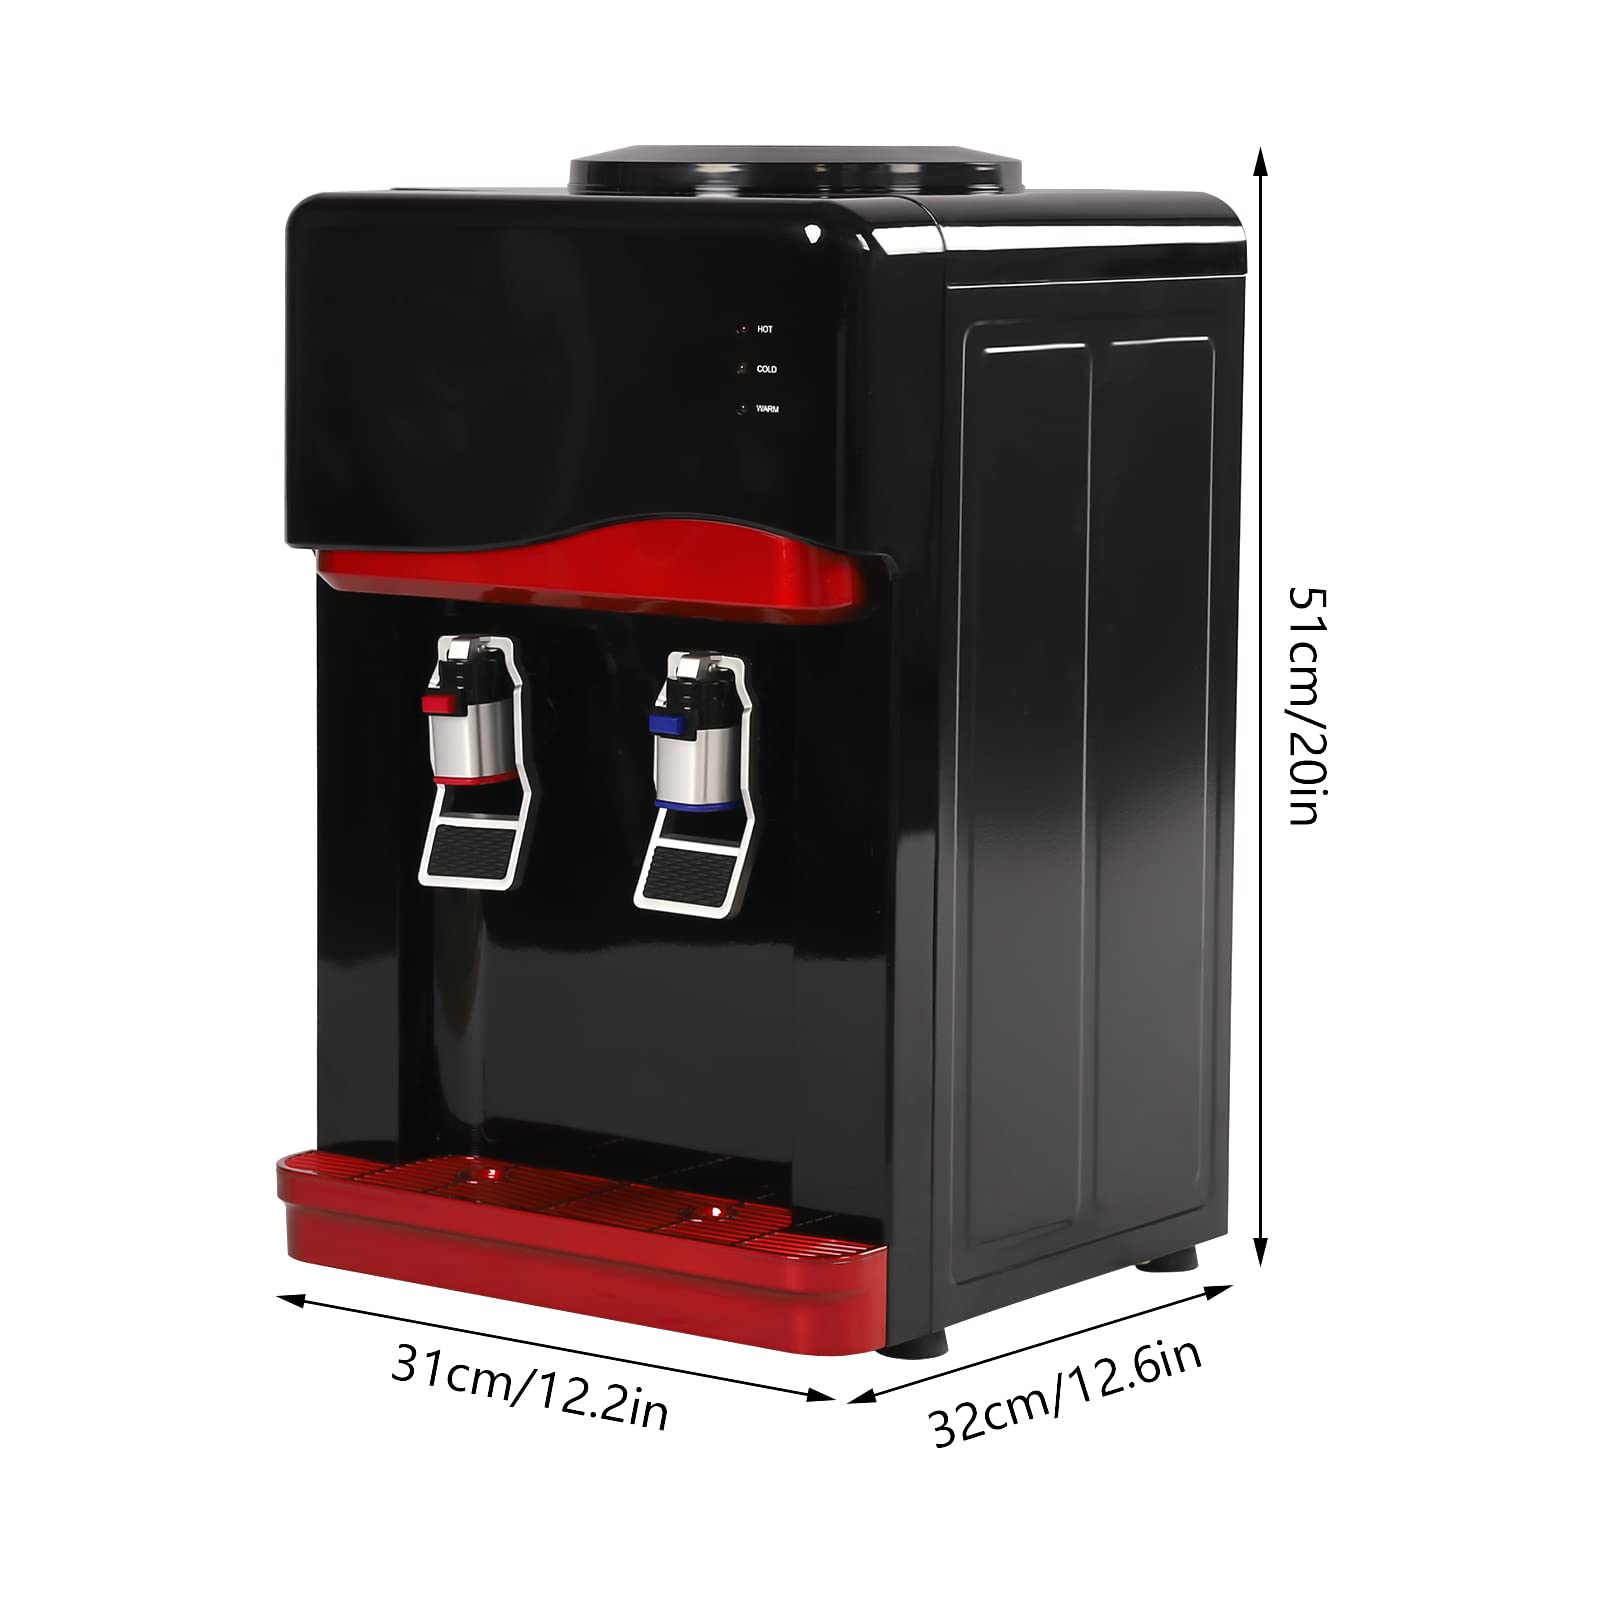 Black, Red Desktop Water Cooler Dispenser Top Loading Water Dispenser Hot & Cold Water Coolers with Child Safety Lock Drinking Fountain, 12.2 * 12.6 * 20 in